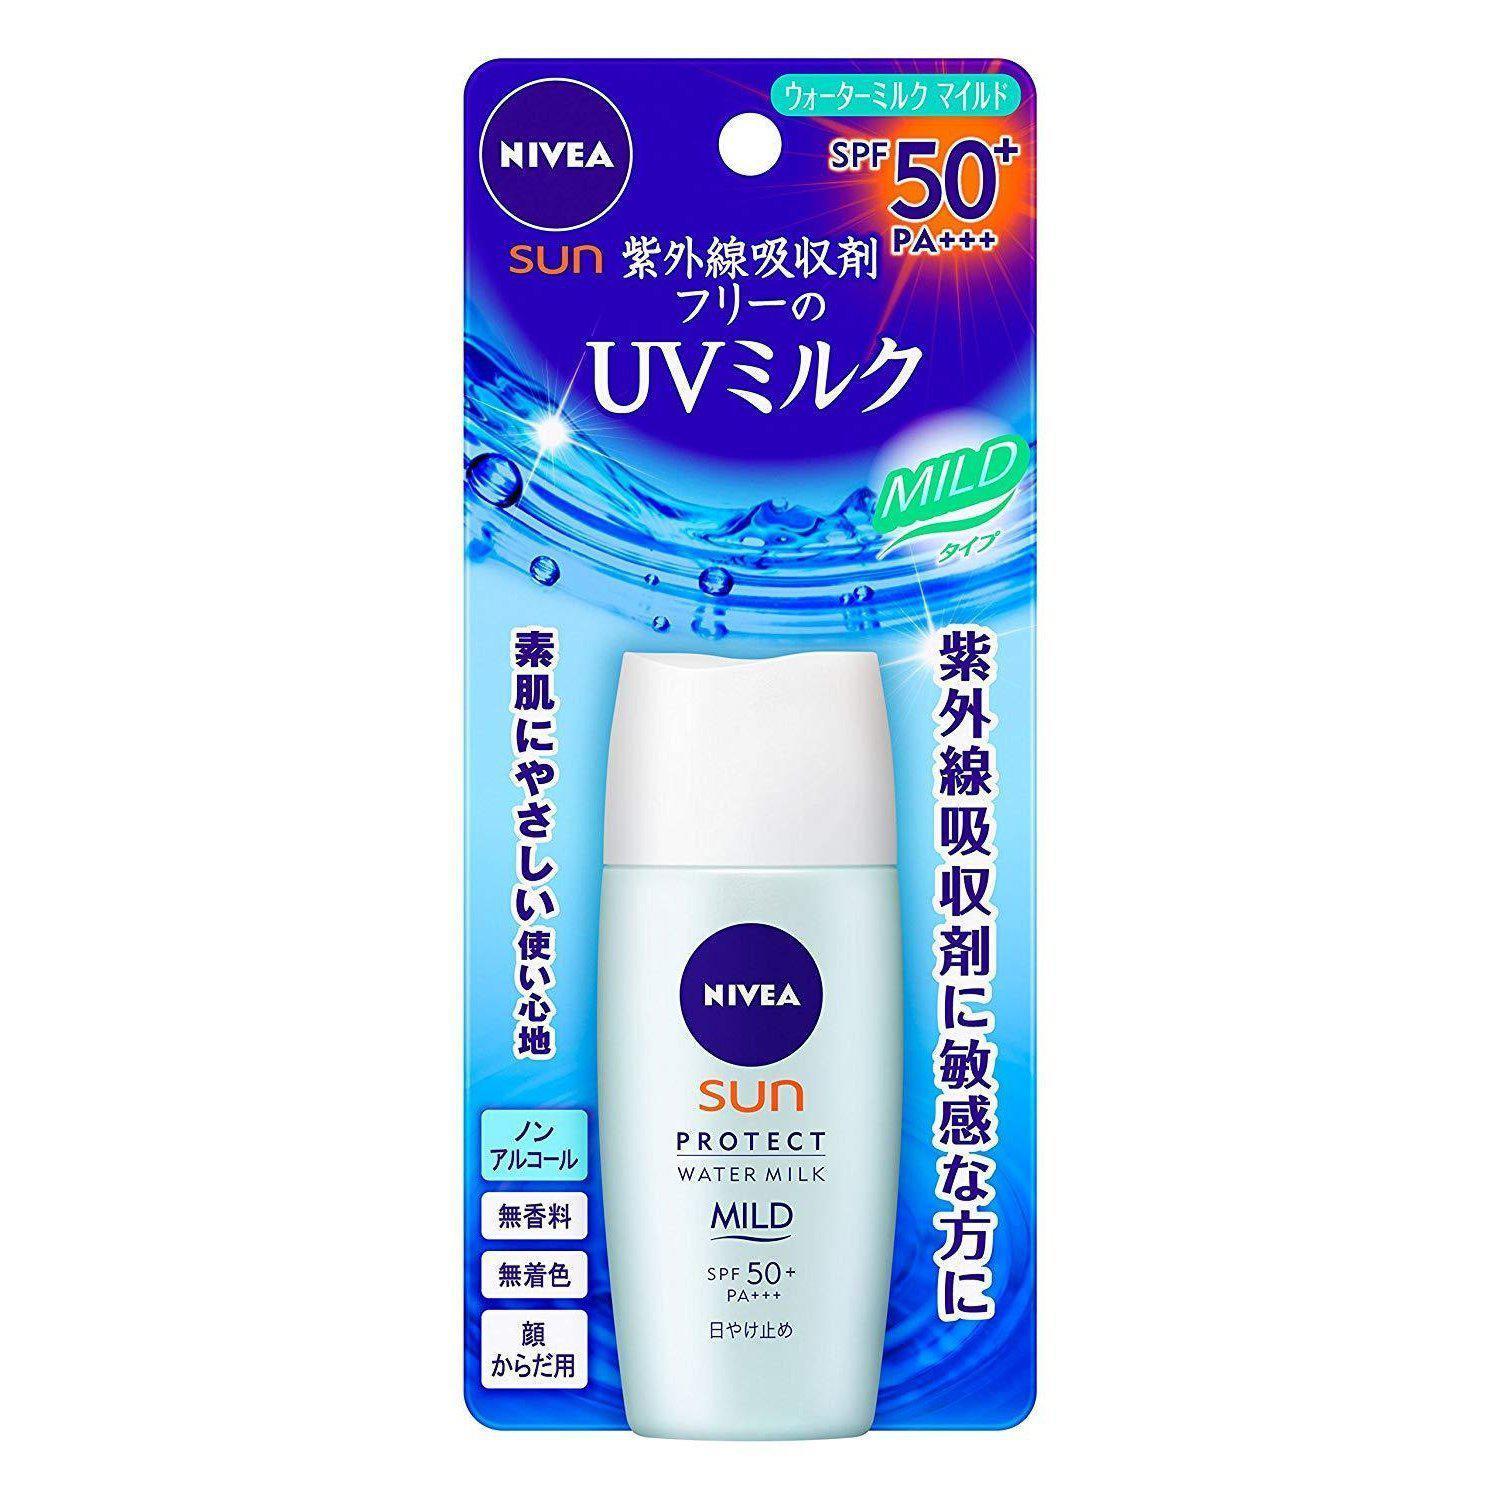 Nivea Sun Protect Water Milk Mild Sunscreen SPF50+ PA+++ 30ml